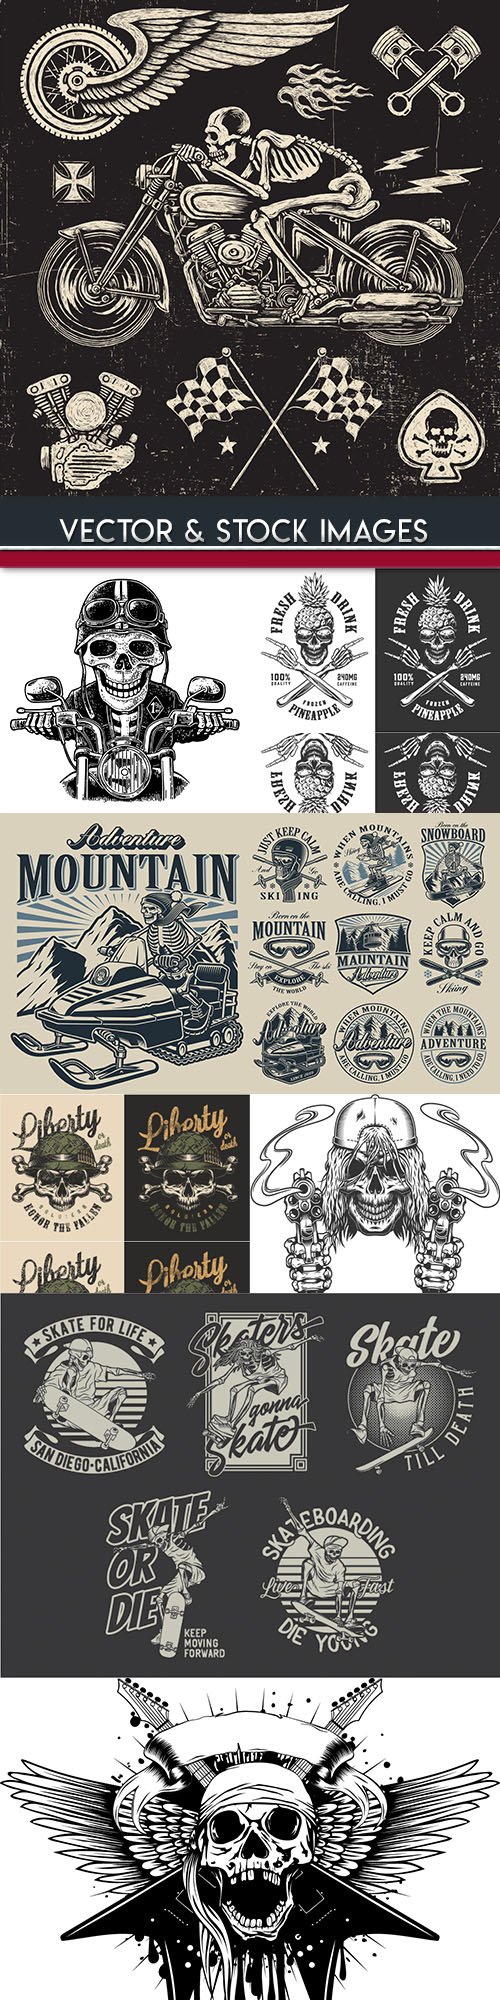 Skull and accessories grunge label drawn design 8